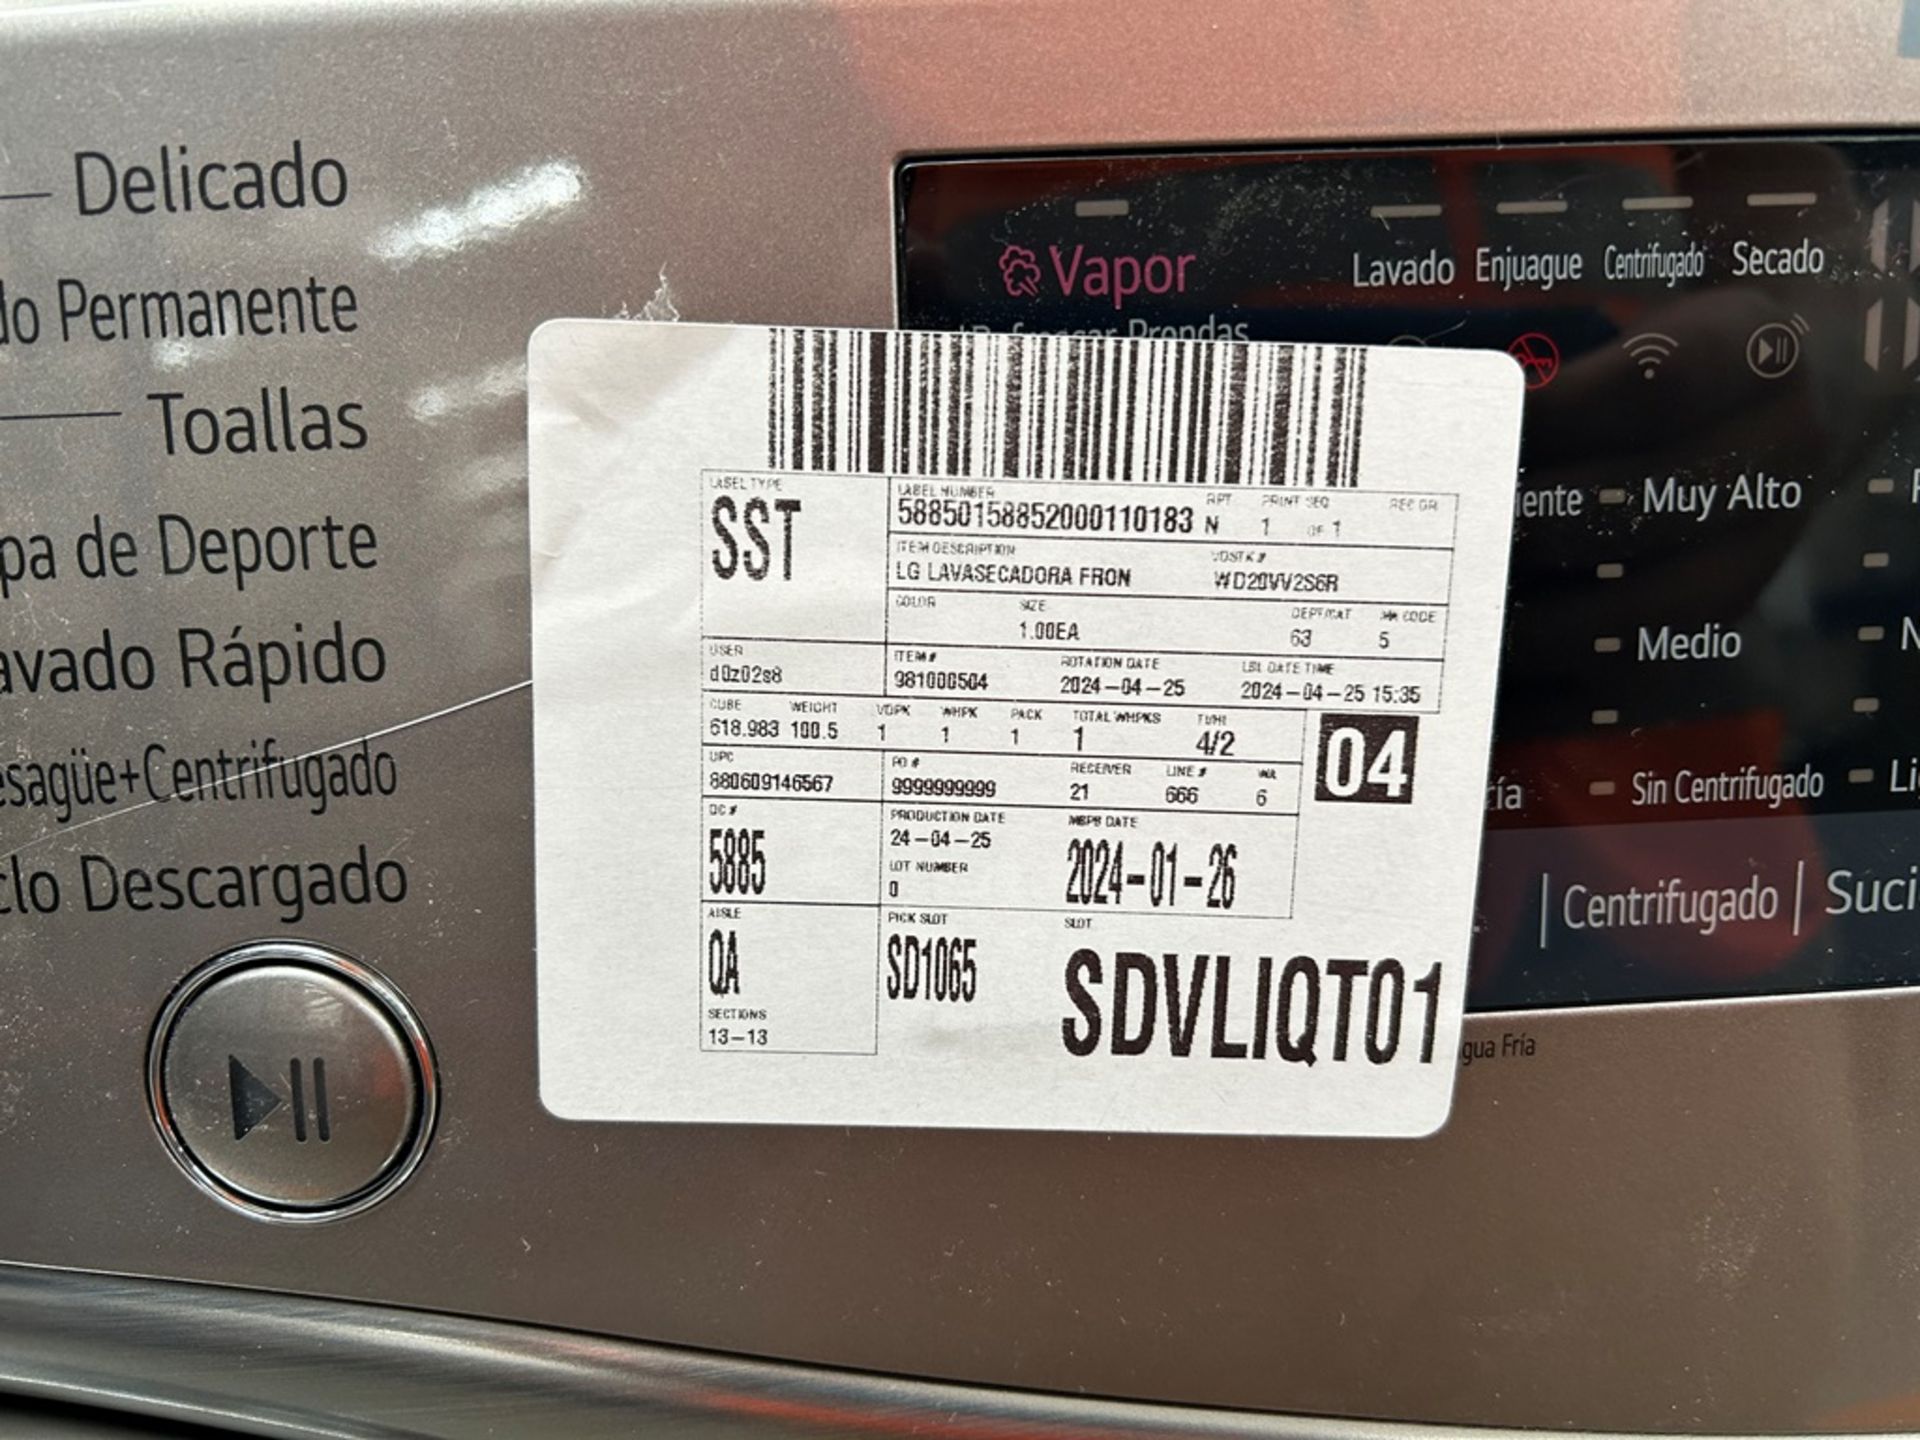 Lavasecadora de 20/11 KG, Marca LG, Modelo WD20VV2S6R, Serie X0V008, Color GRIS (Equipo de devoluci - Image 6 of 7